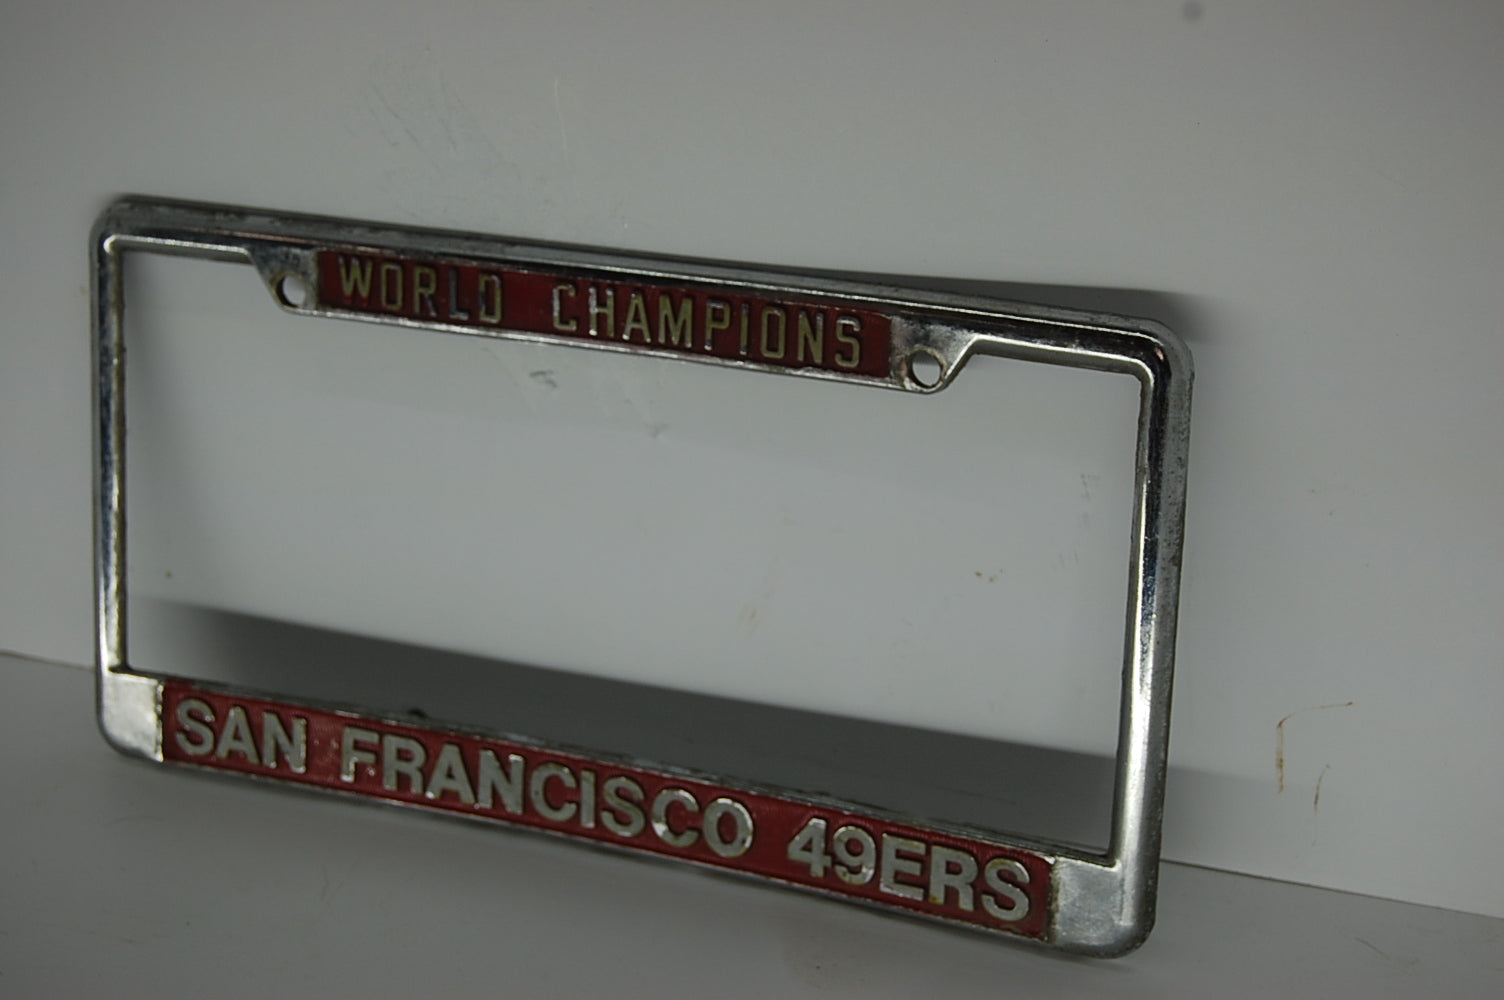 Vintage 49ers San Francisco License Plate Frame Metal Chrome Collectib ...